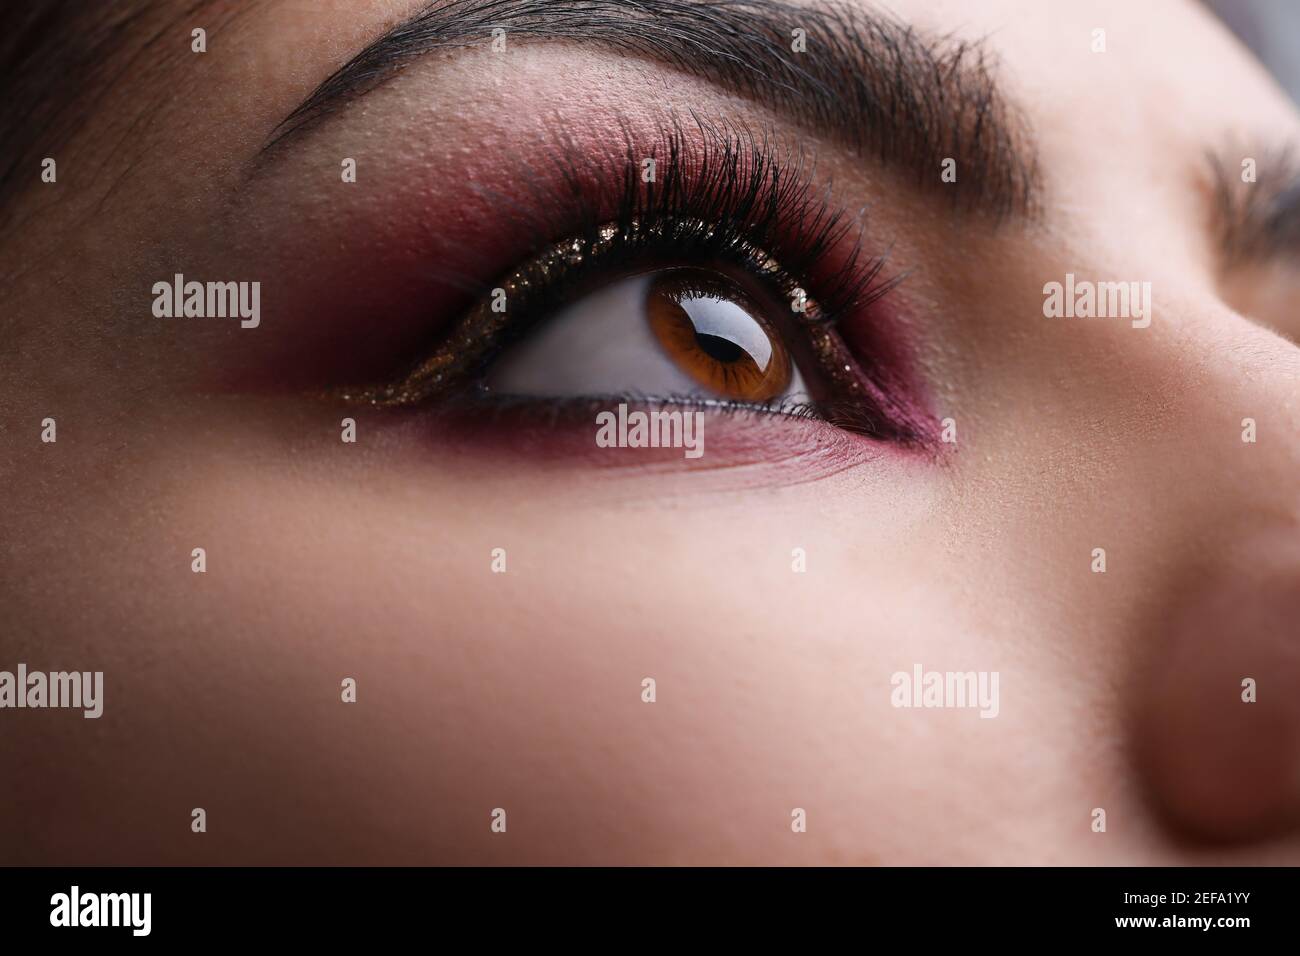 Woman's face with professional eye makeup closeup Stock Photo